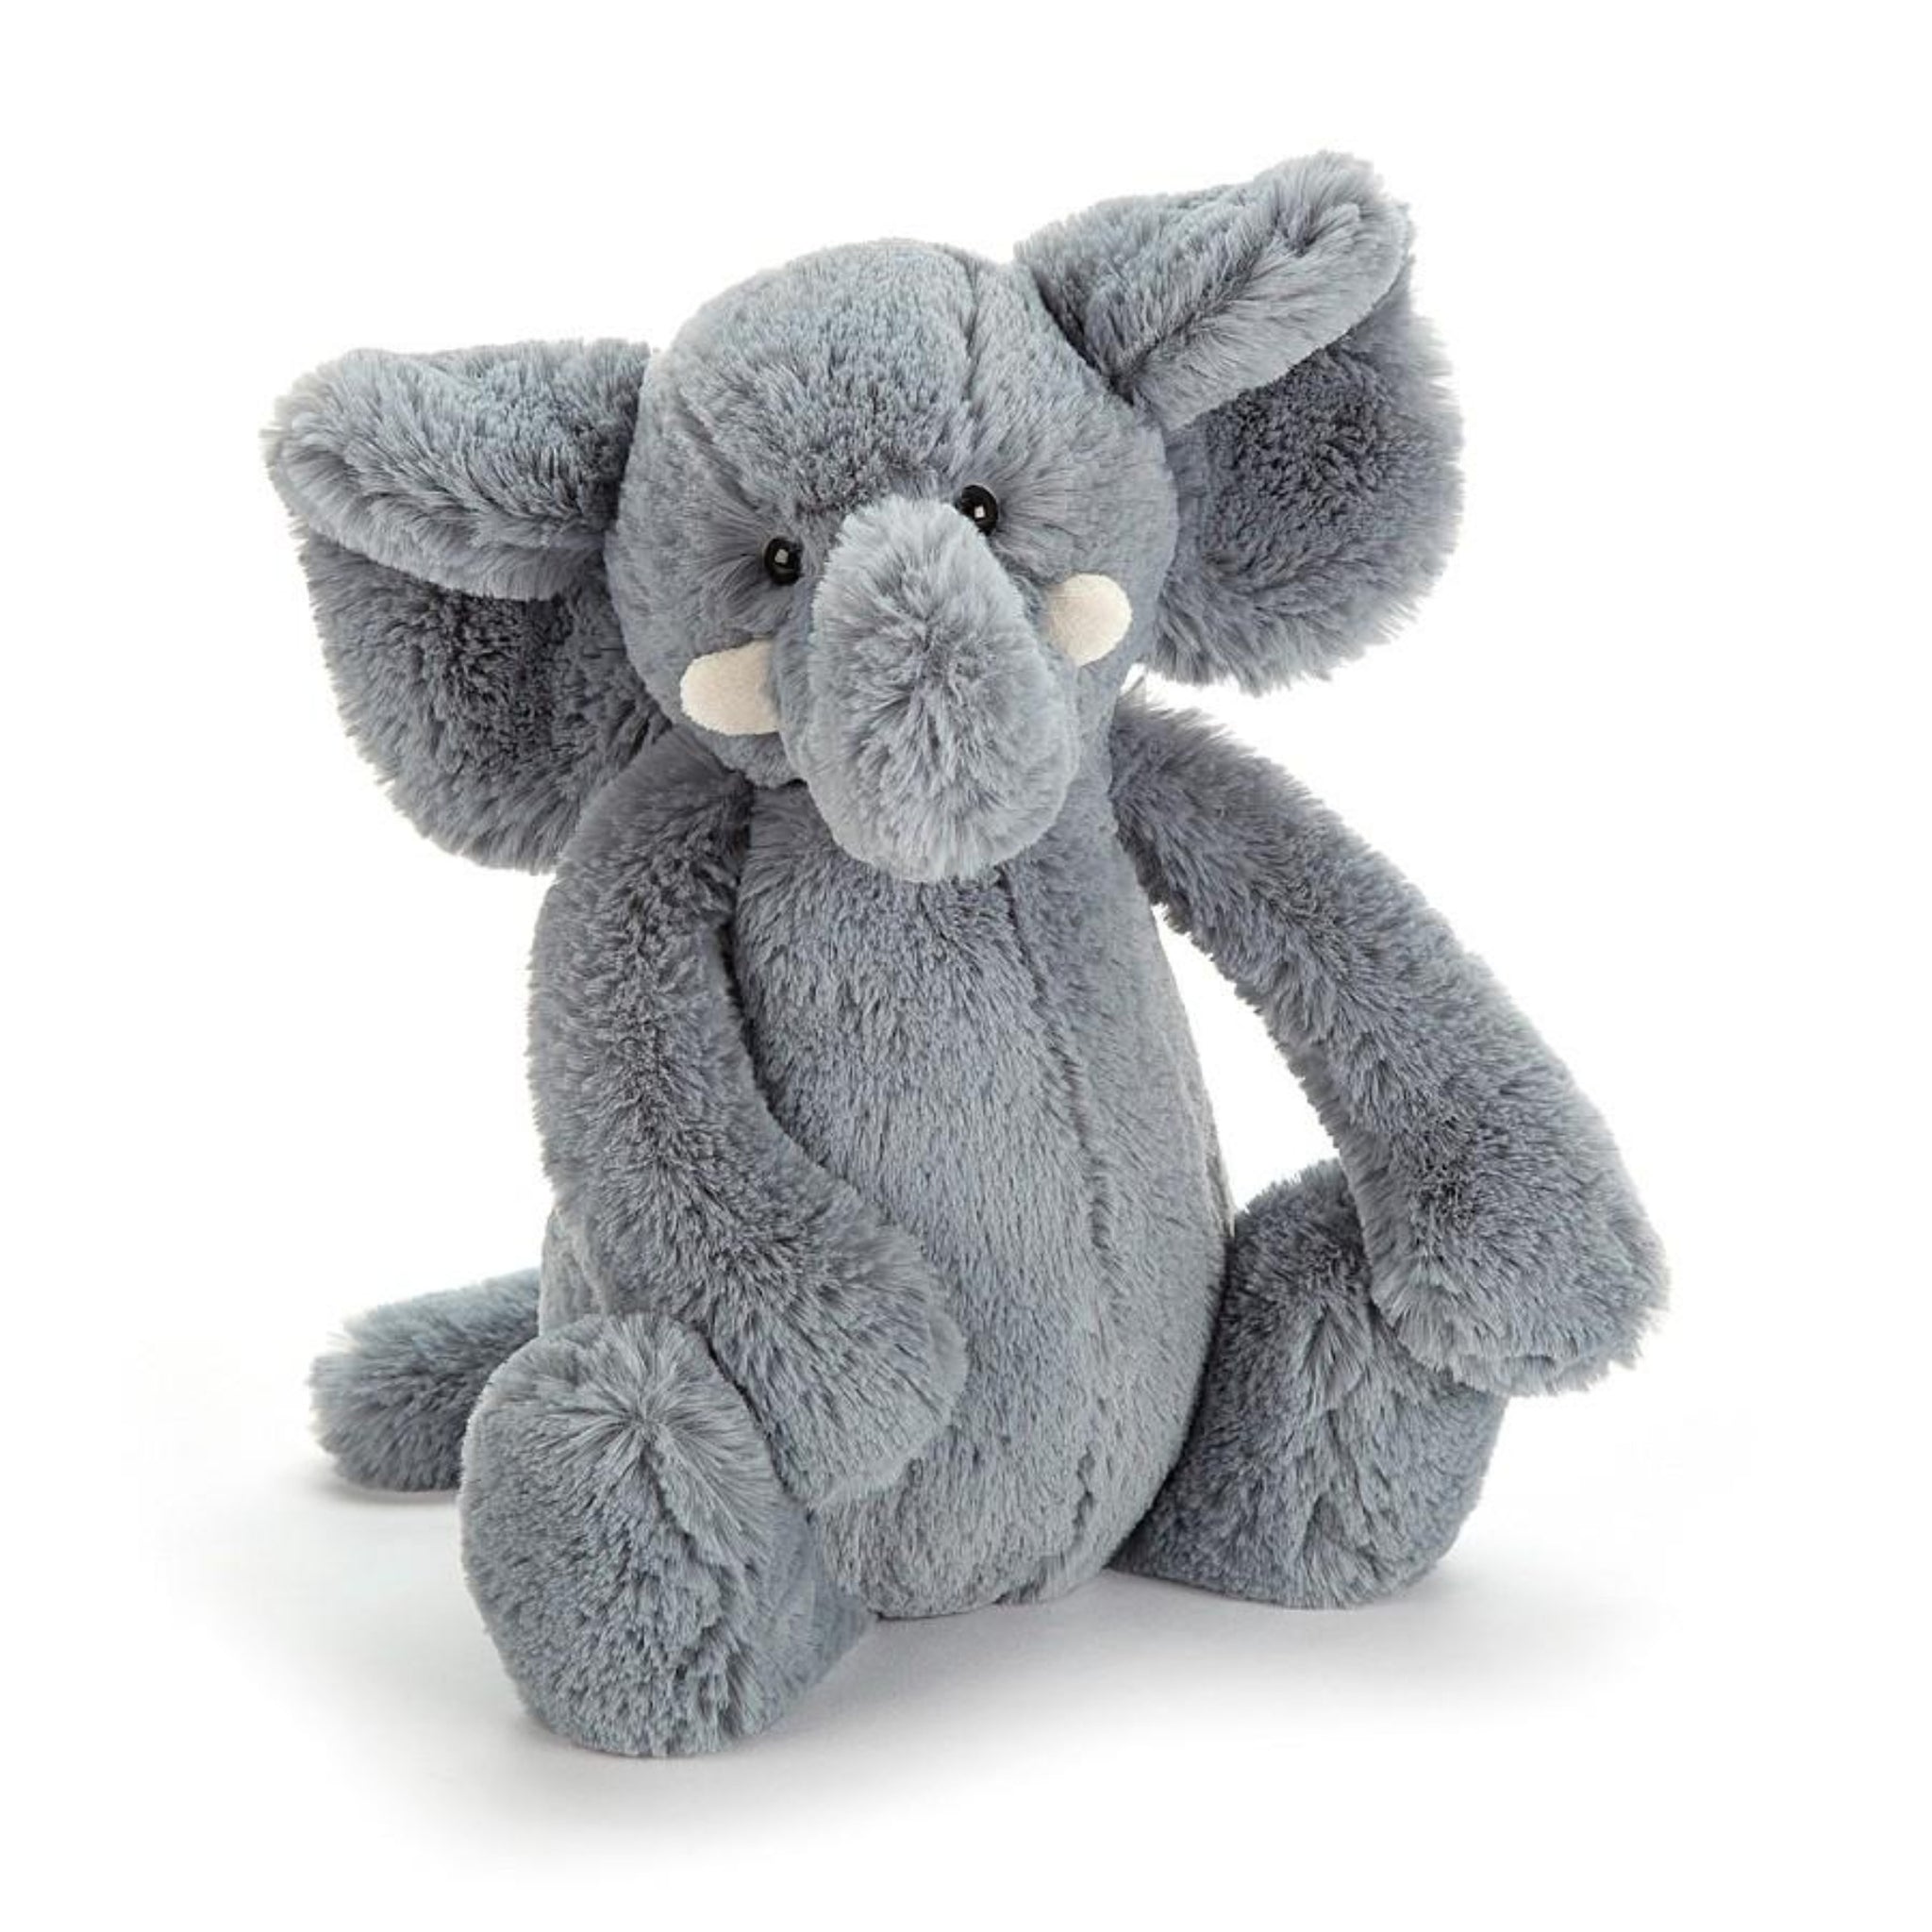 JellyCat medium plush blue elephant toy